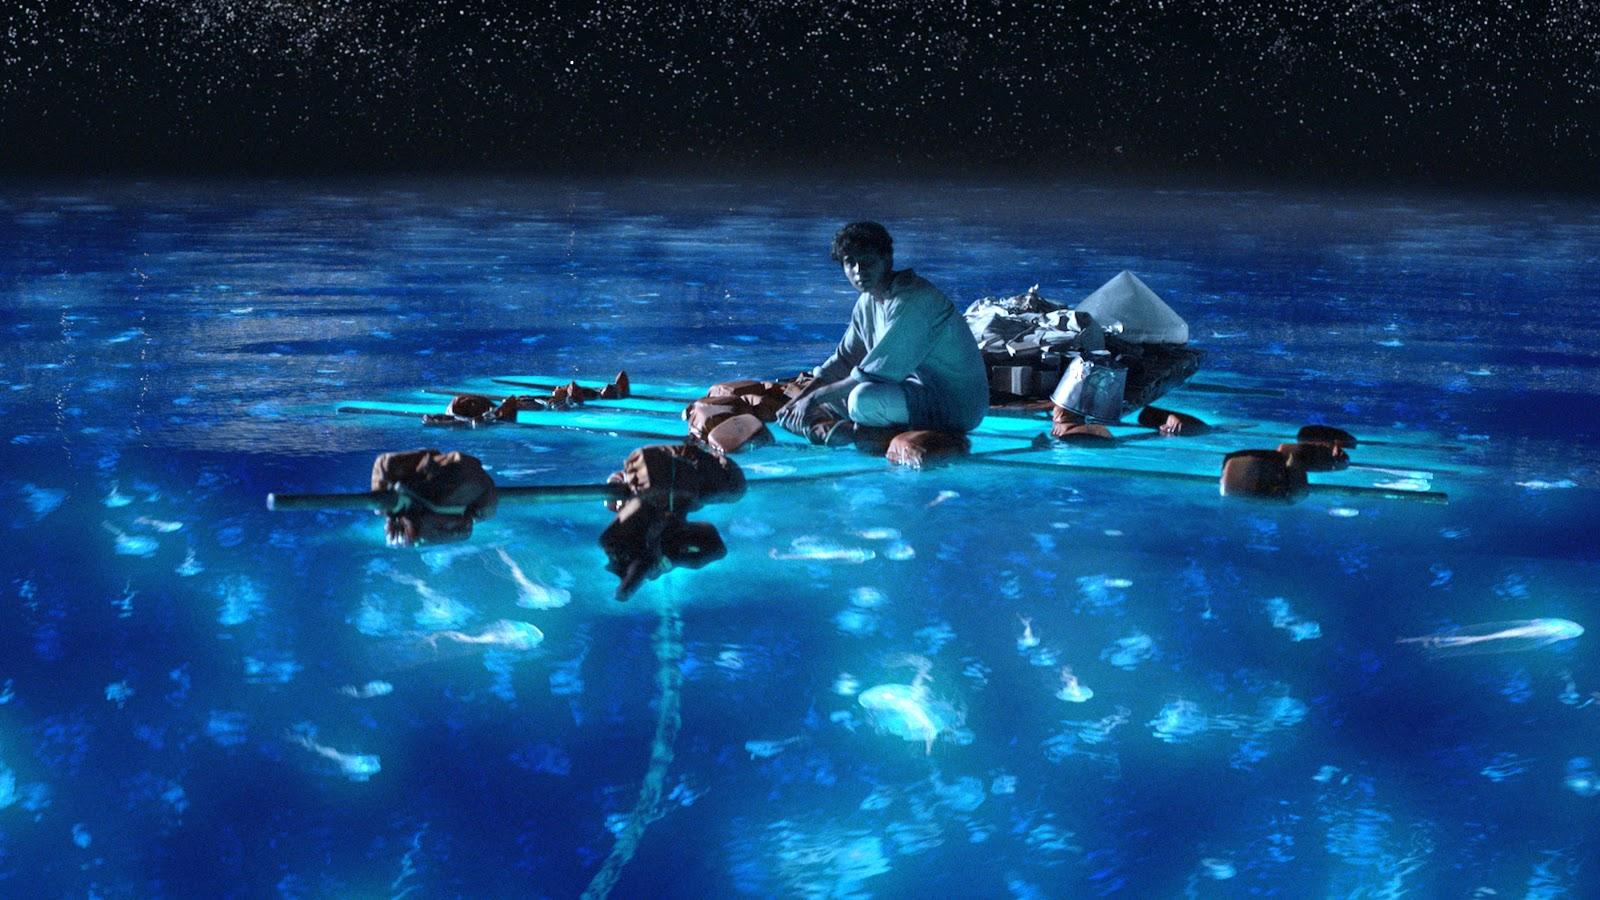 Maldives beach becomes sea of stars thanks to bioluminescent